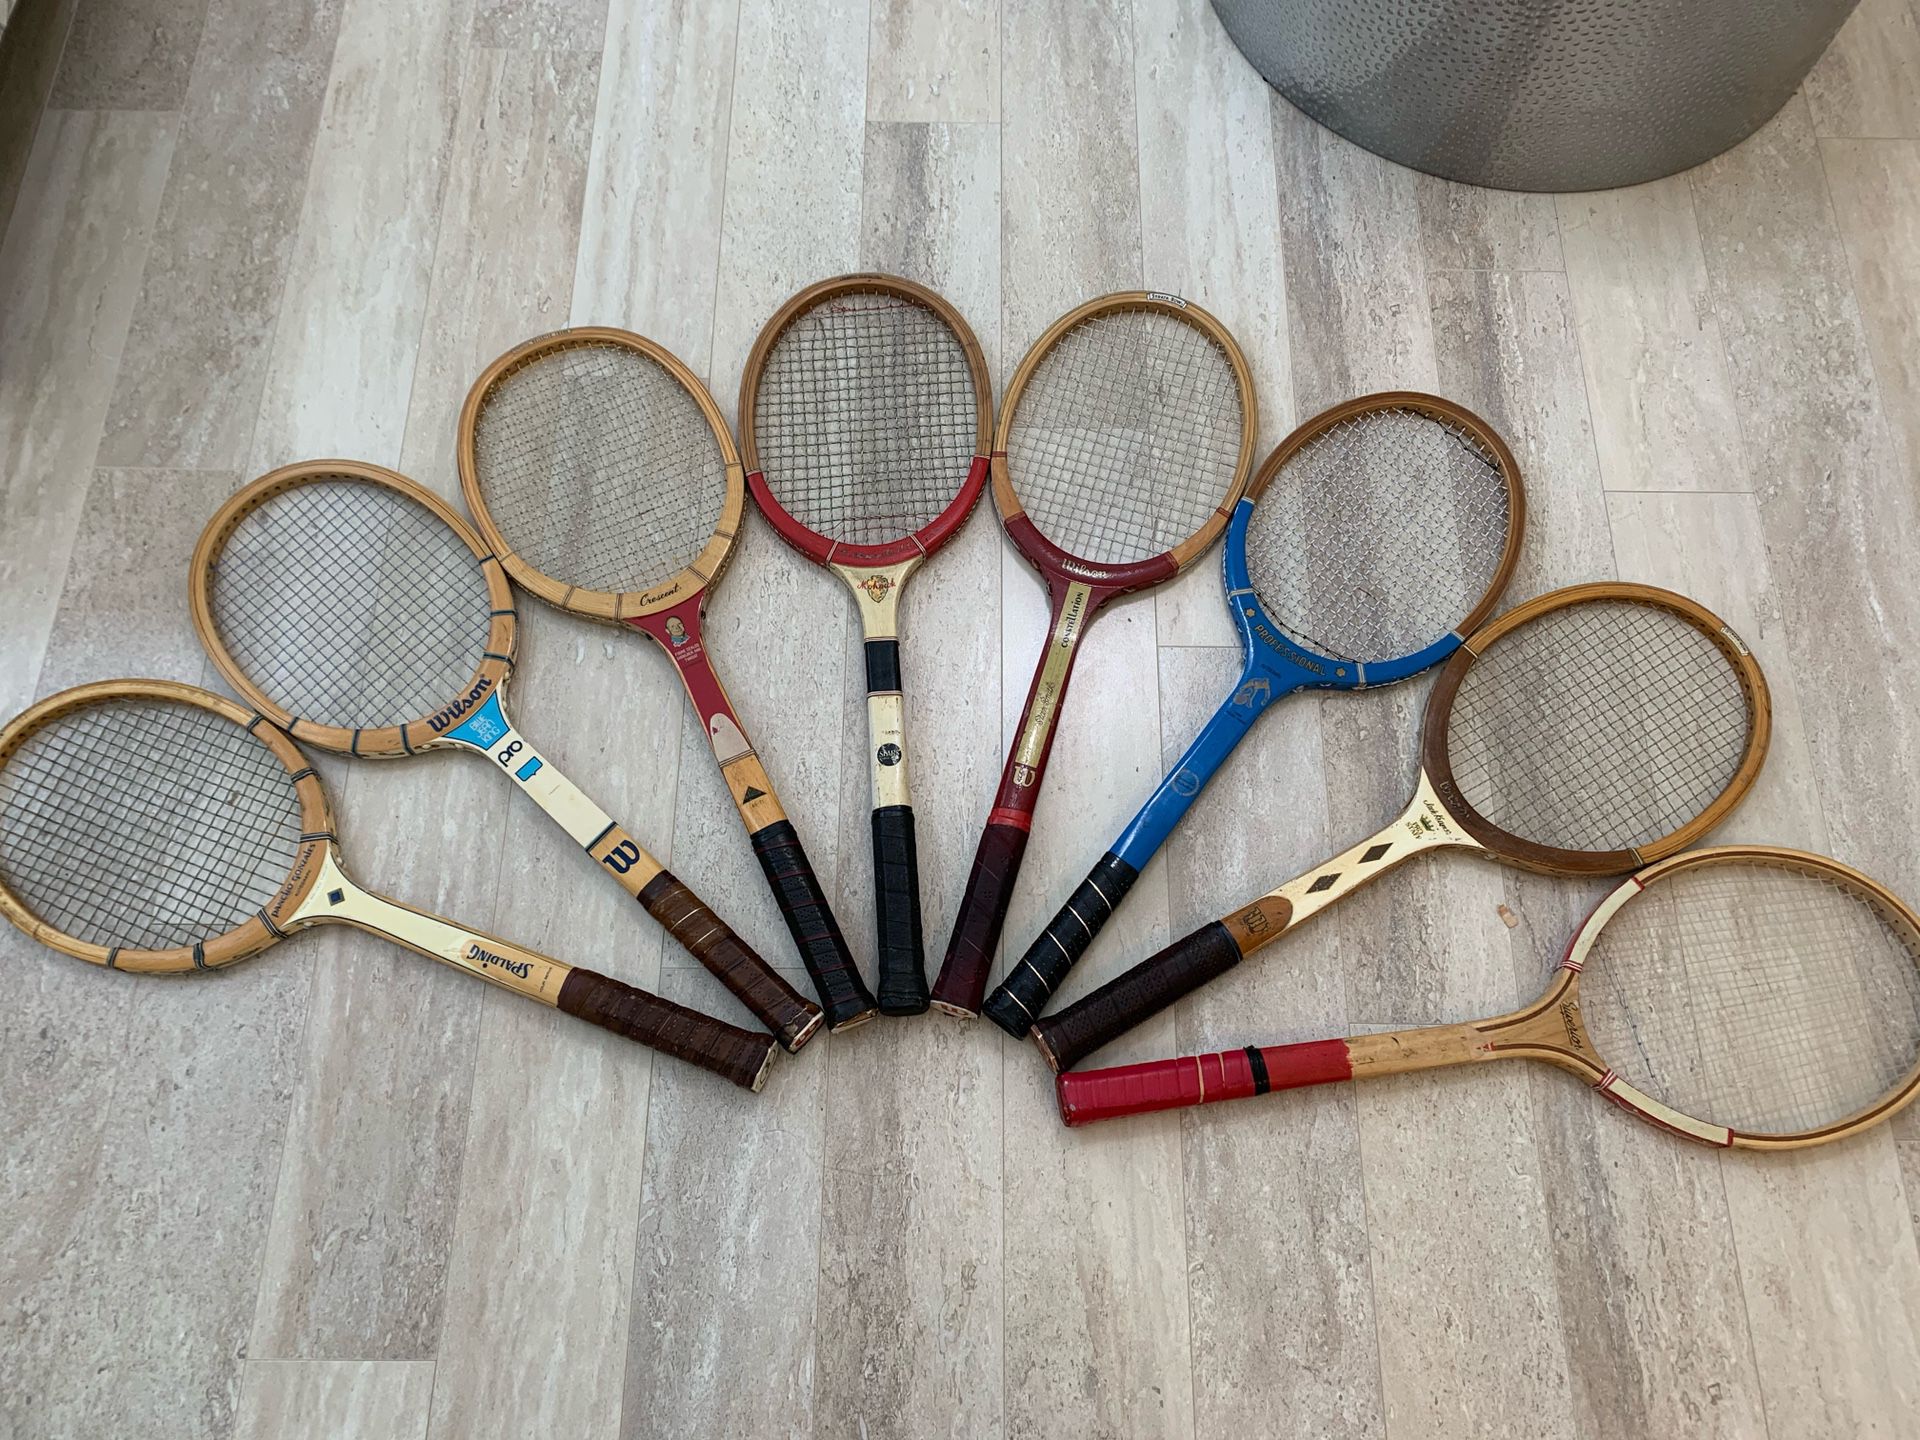 Vintage Wooden Tennis Rackets